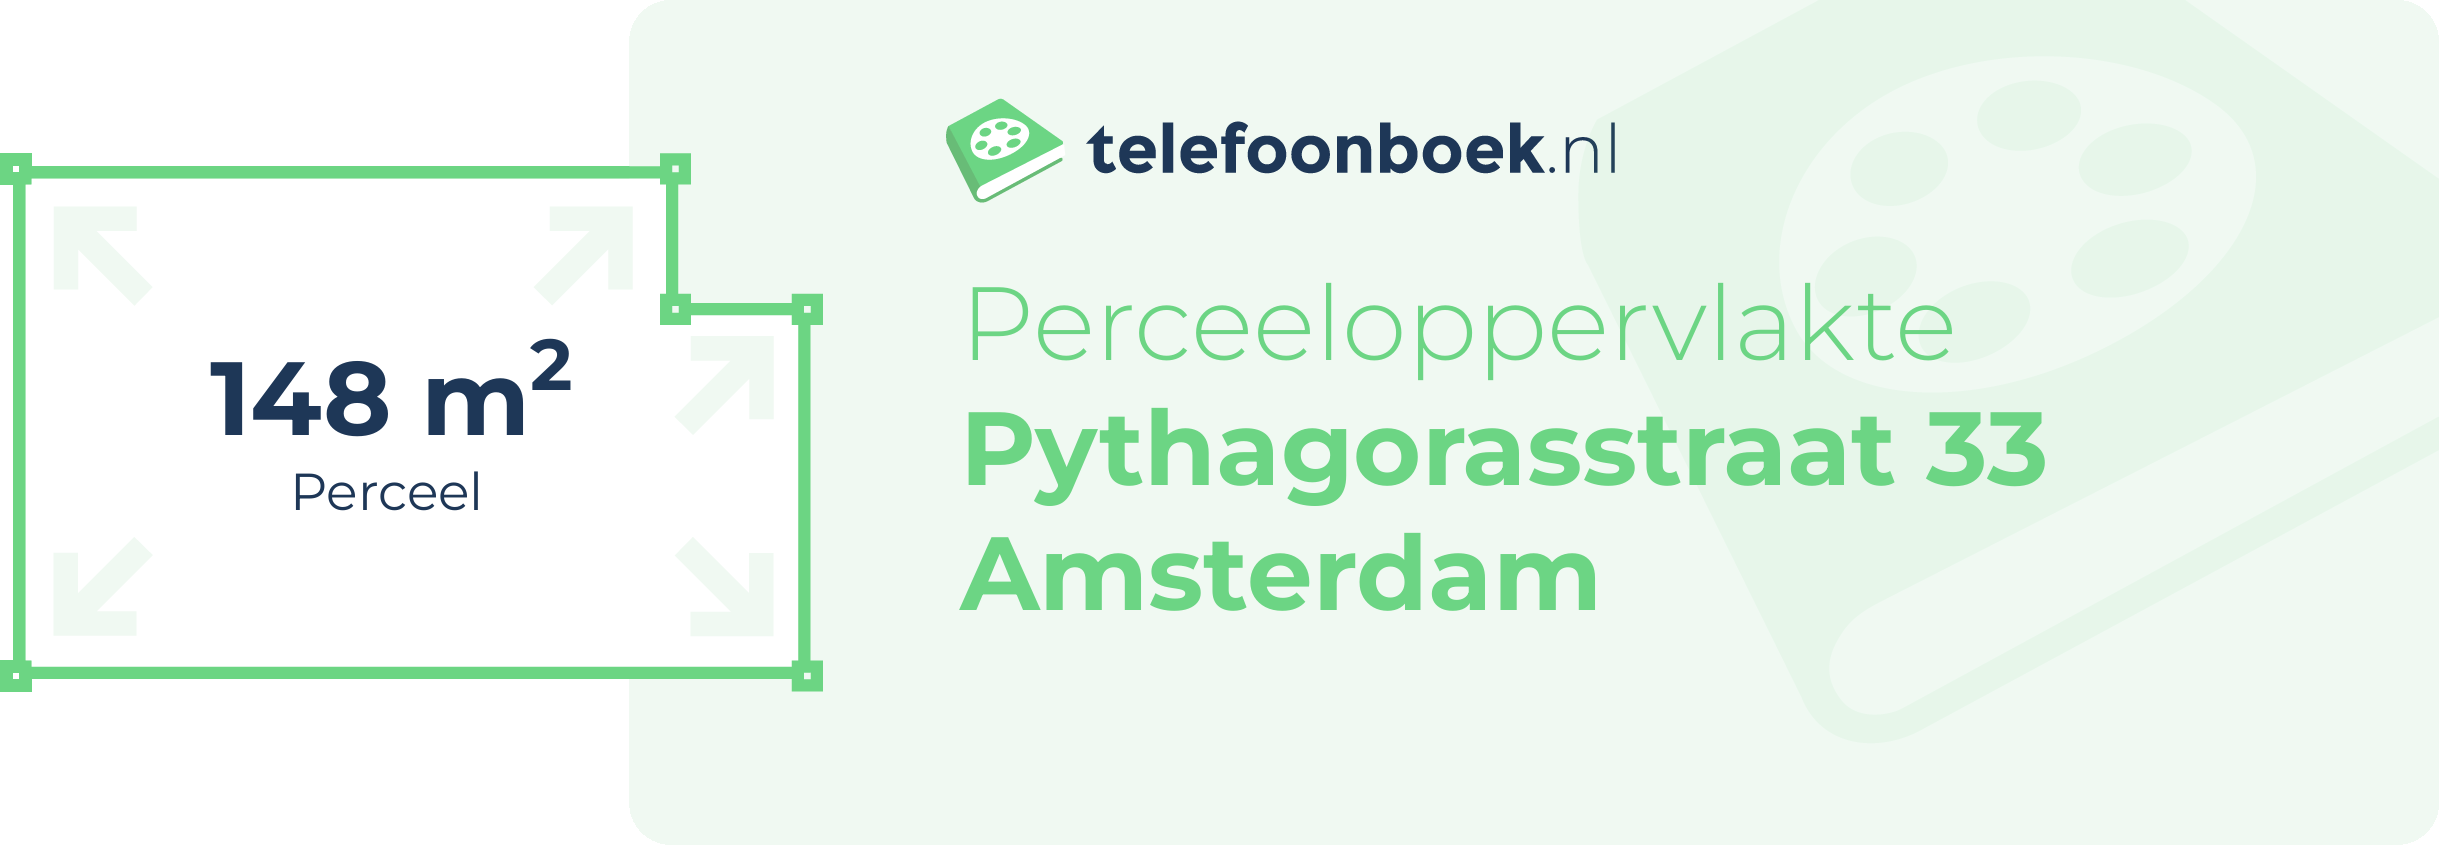 Perceeloppervlakte Pythagorasstraat 33 Amsterdam